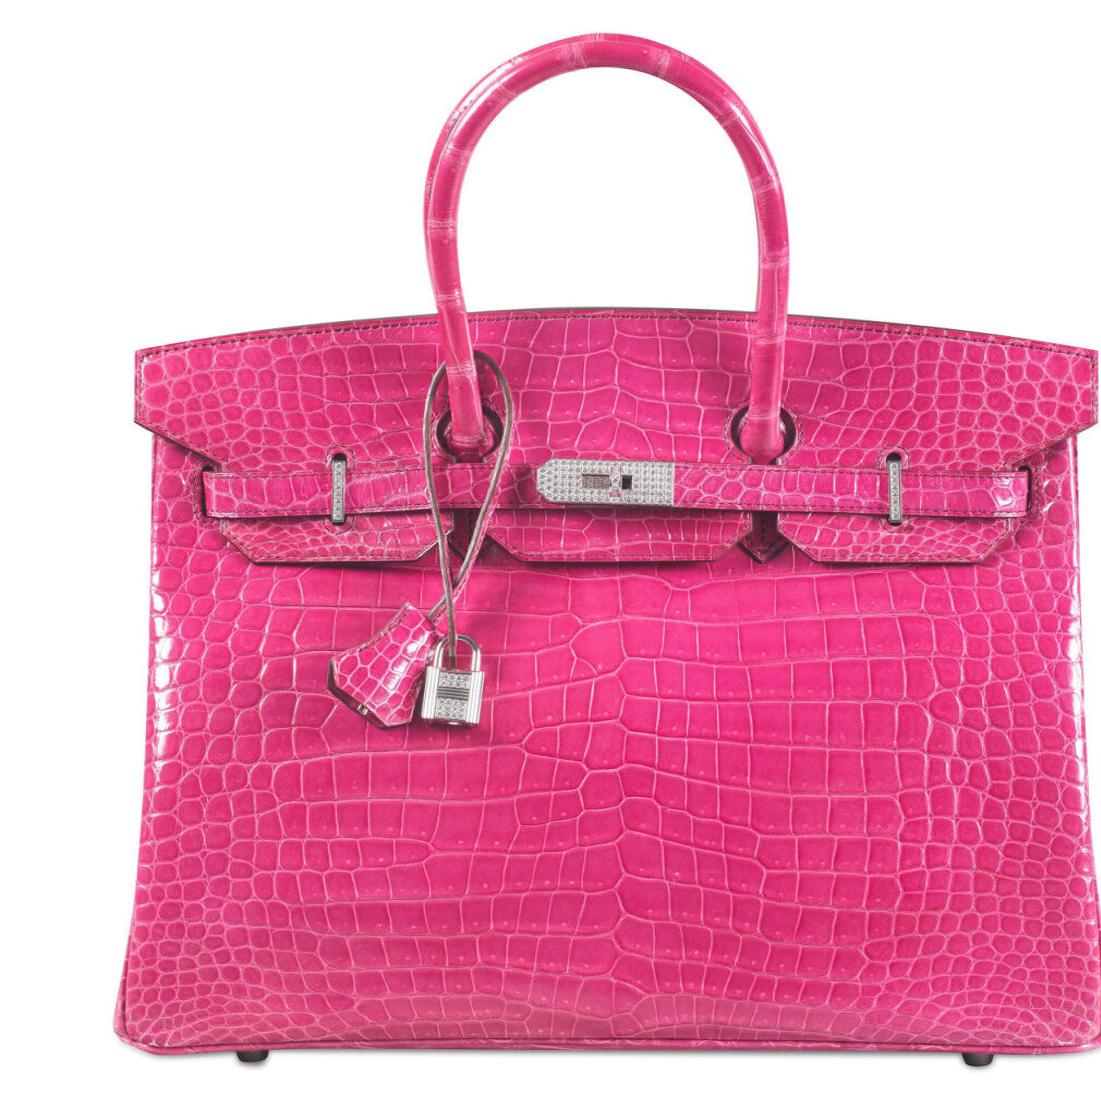 Jane Birkin Wants Hermès To Take Her Name Off The Birkin Bag